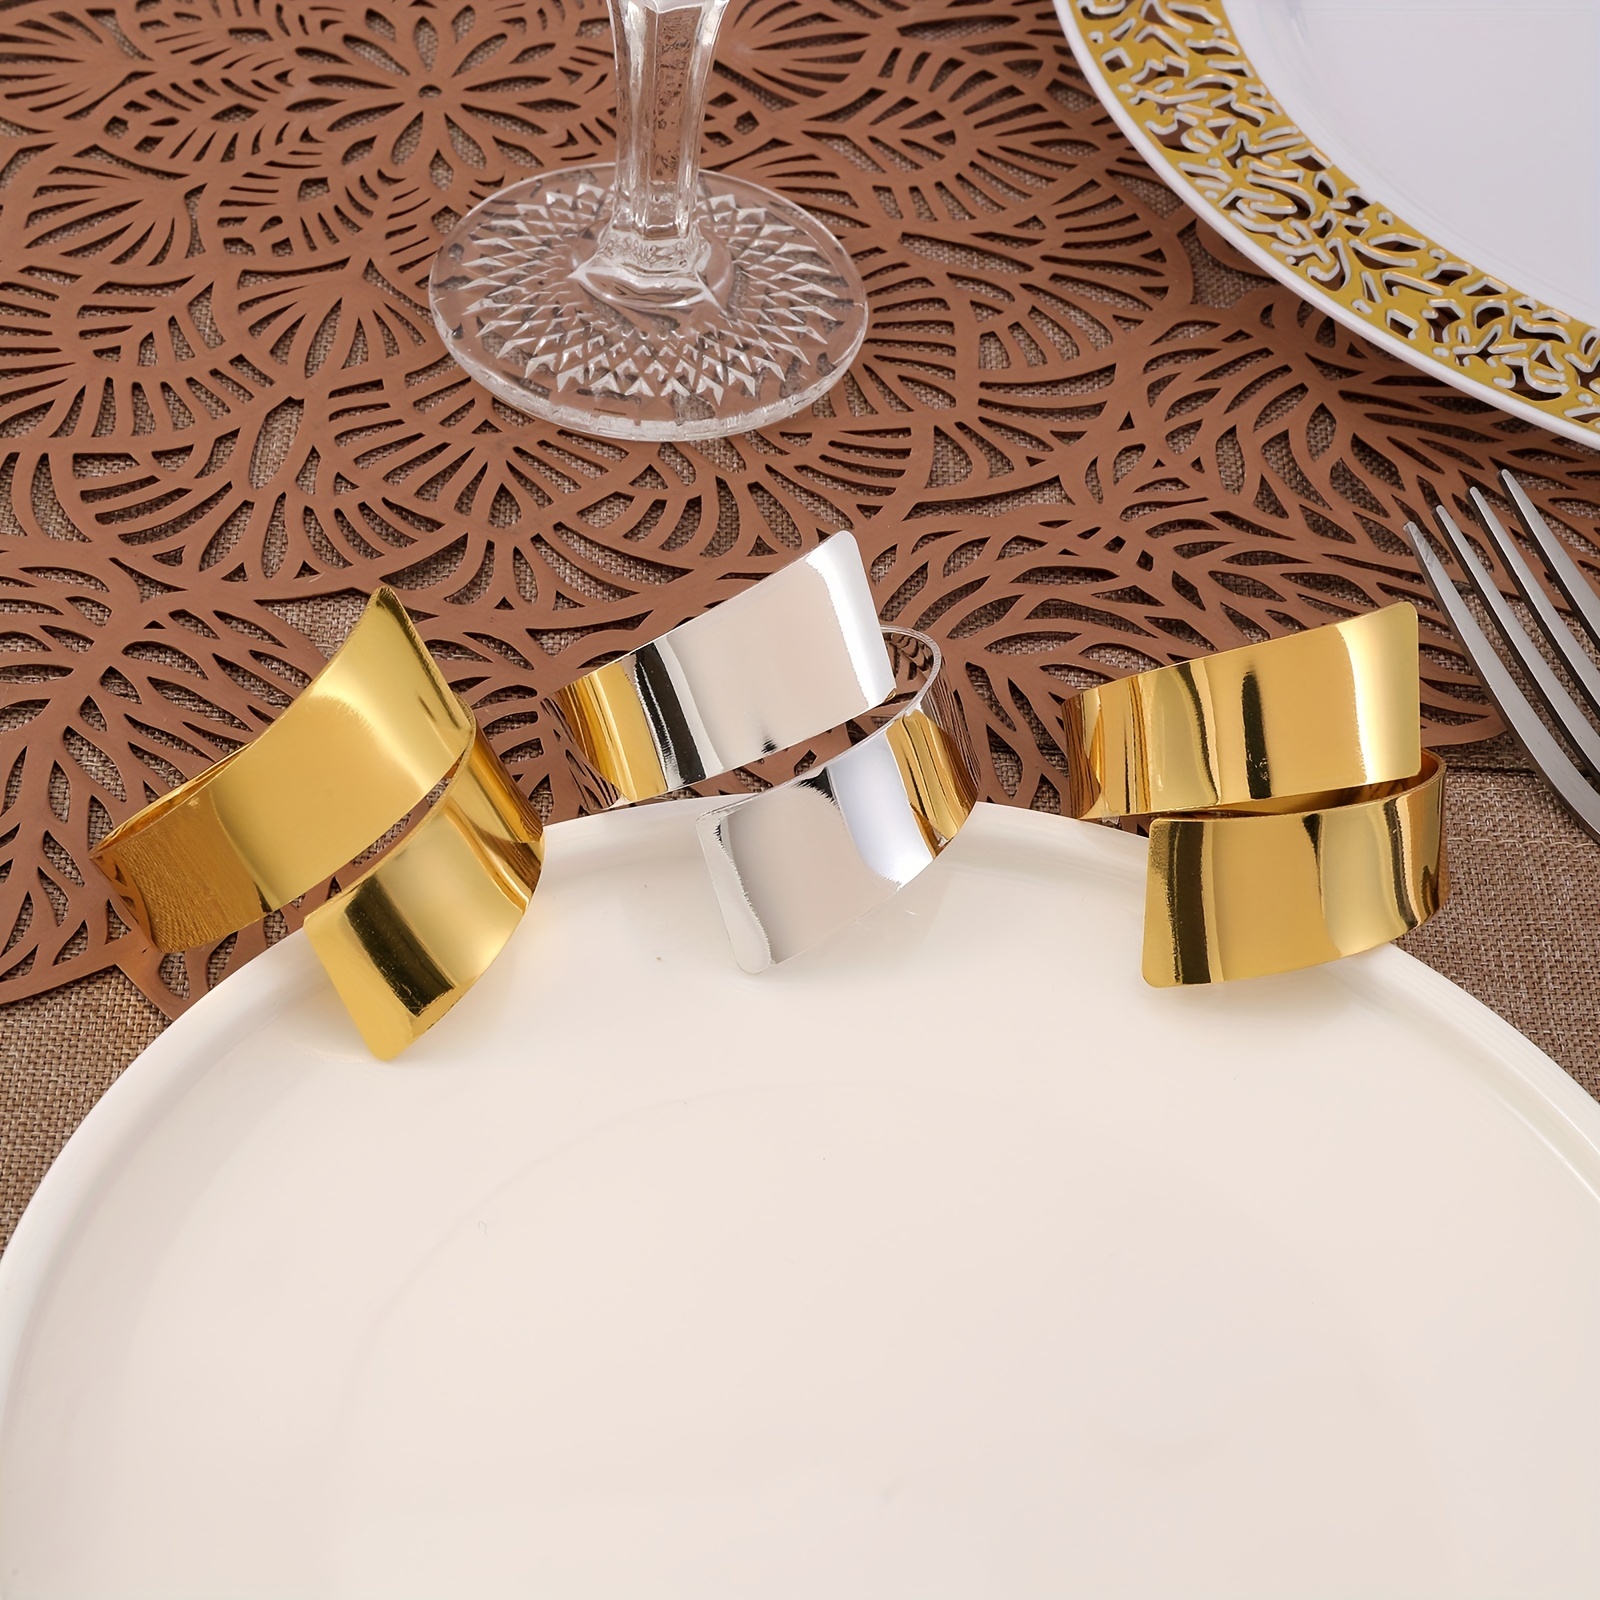 Tohuu Floral Serviette Buckles Elegant Napkin Ring Holders Exquisite Elegant  Floral Napkins Rings for Wedding Banquet Christmas Table Setting Decor big  sale 